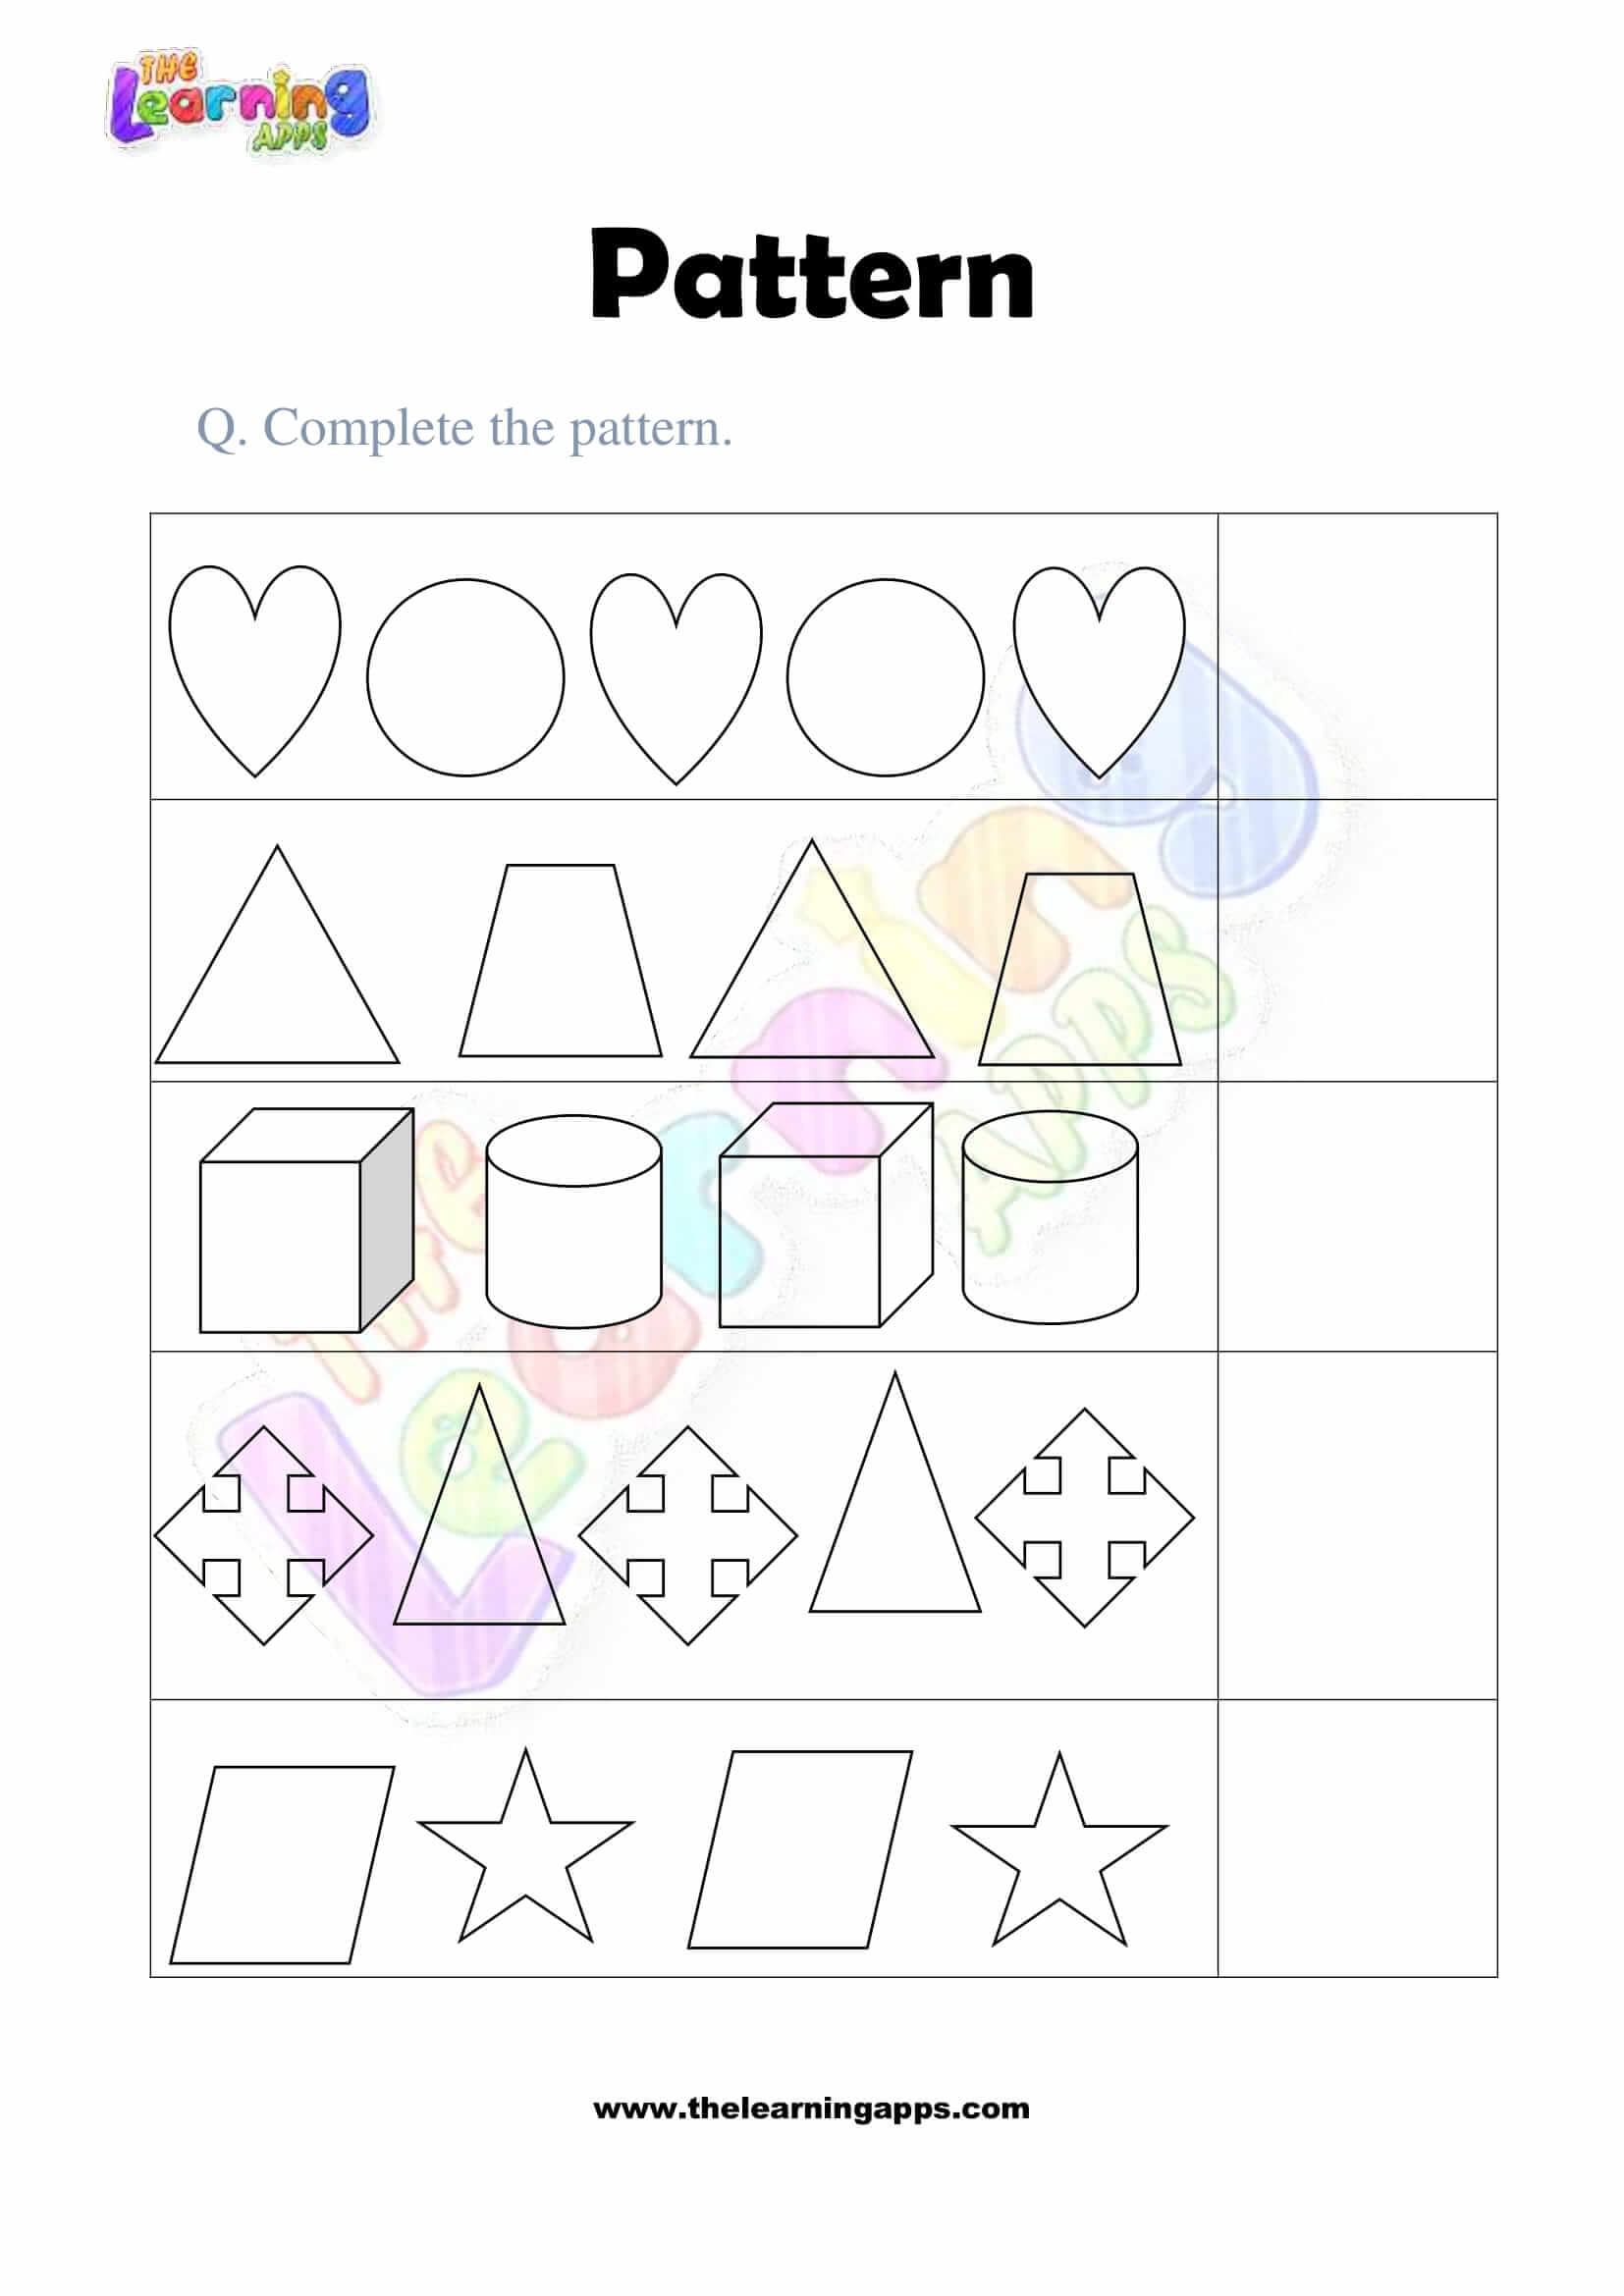 Pattern Worksheet - Grade 2 - Activity 9